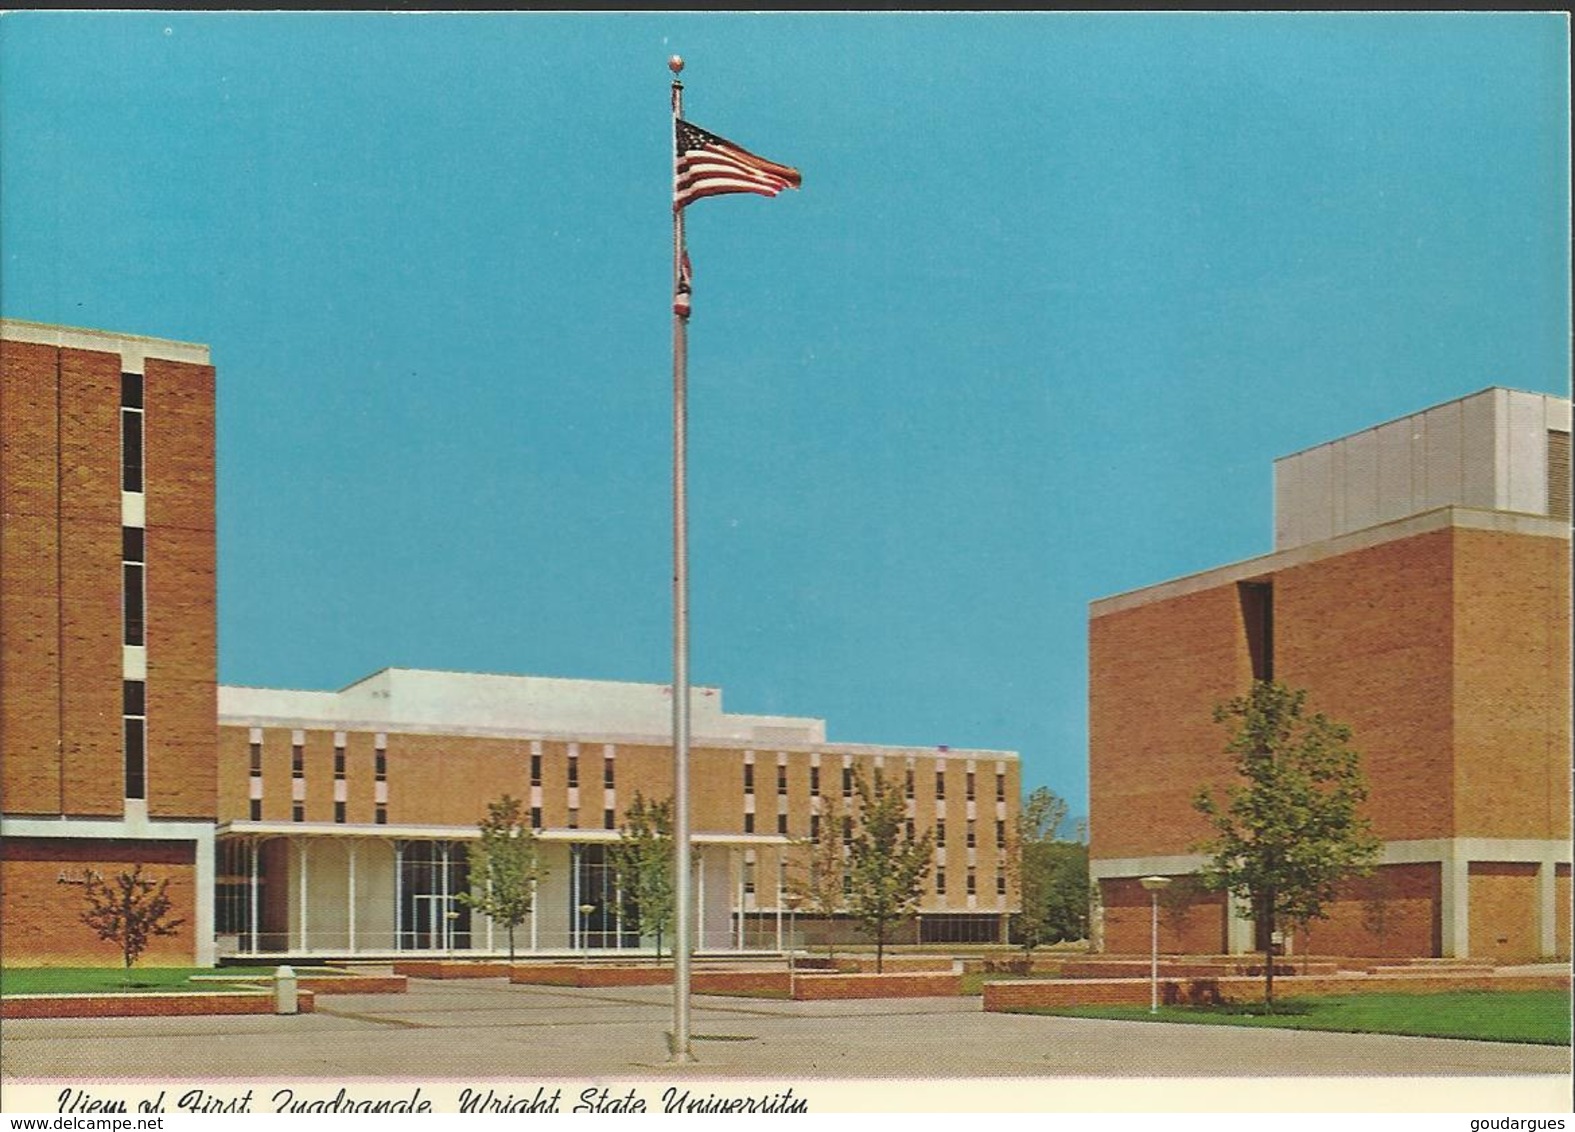 View Of First Quadrangle Wright State University. - Dayton